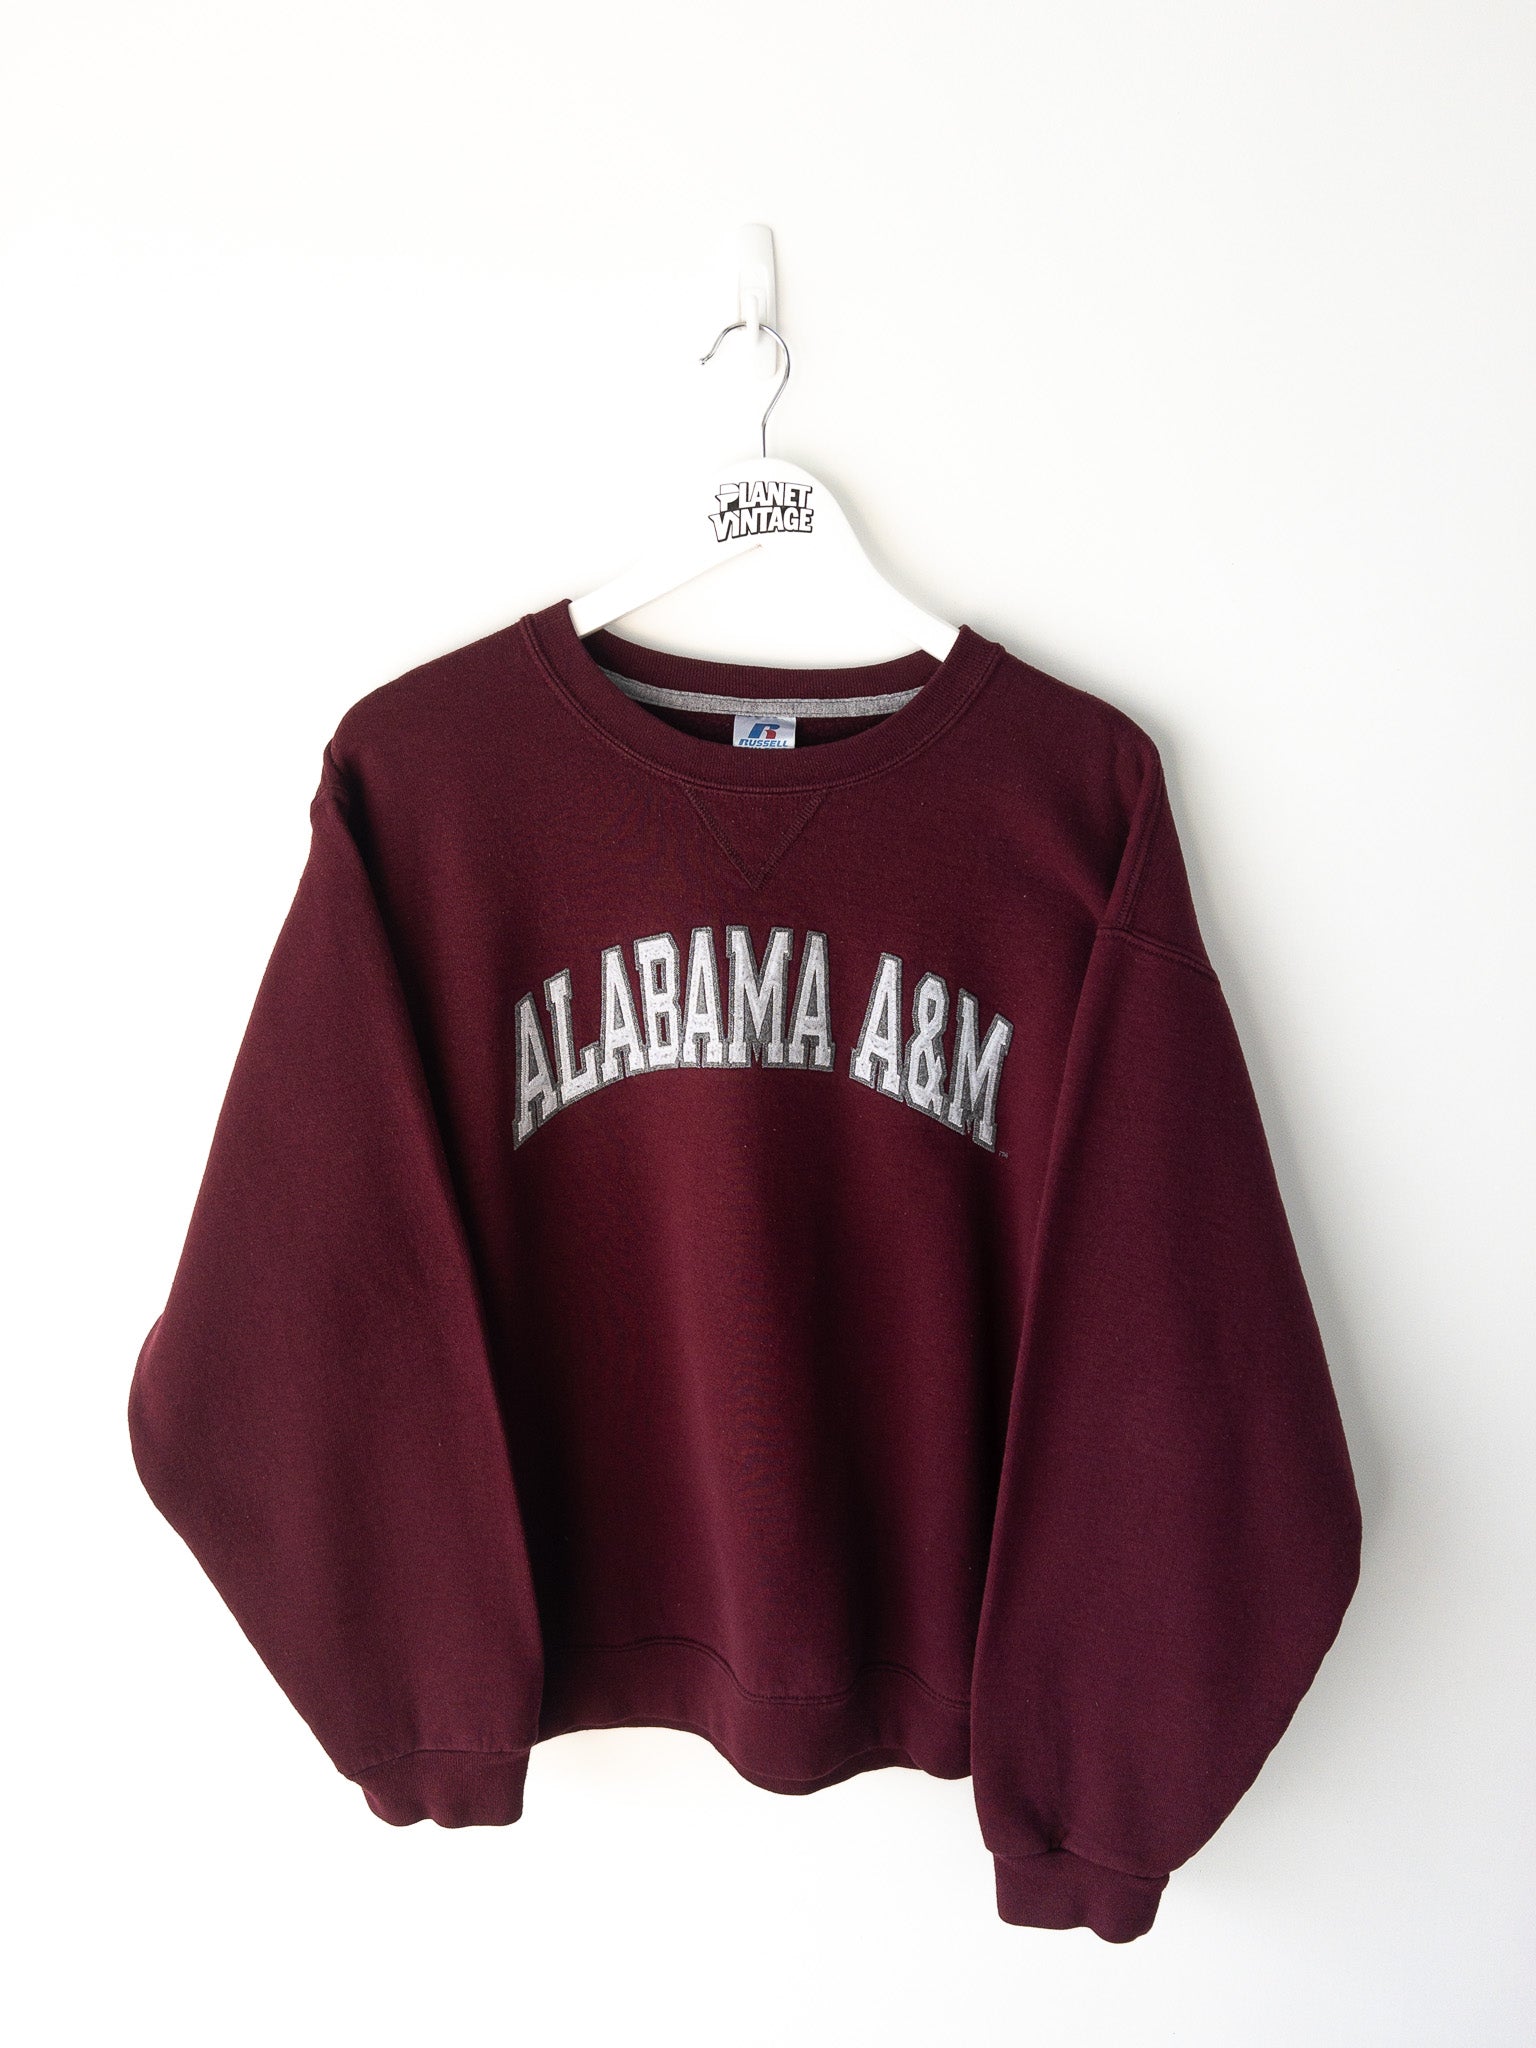 Vintage Alabama A&M University Sweatshirt (L)